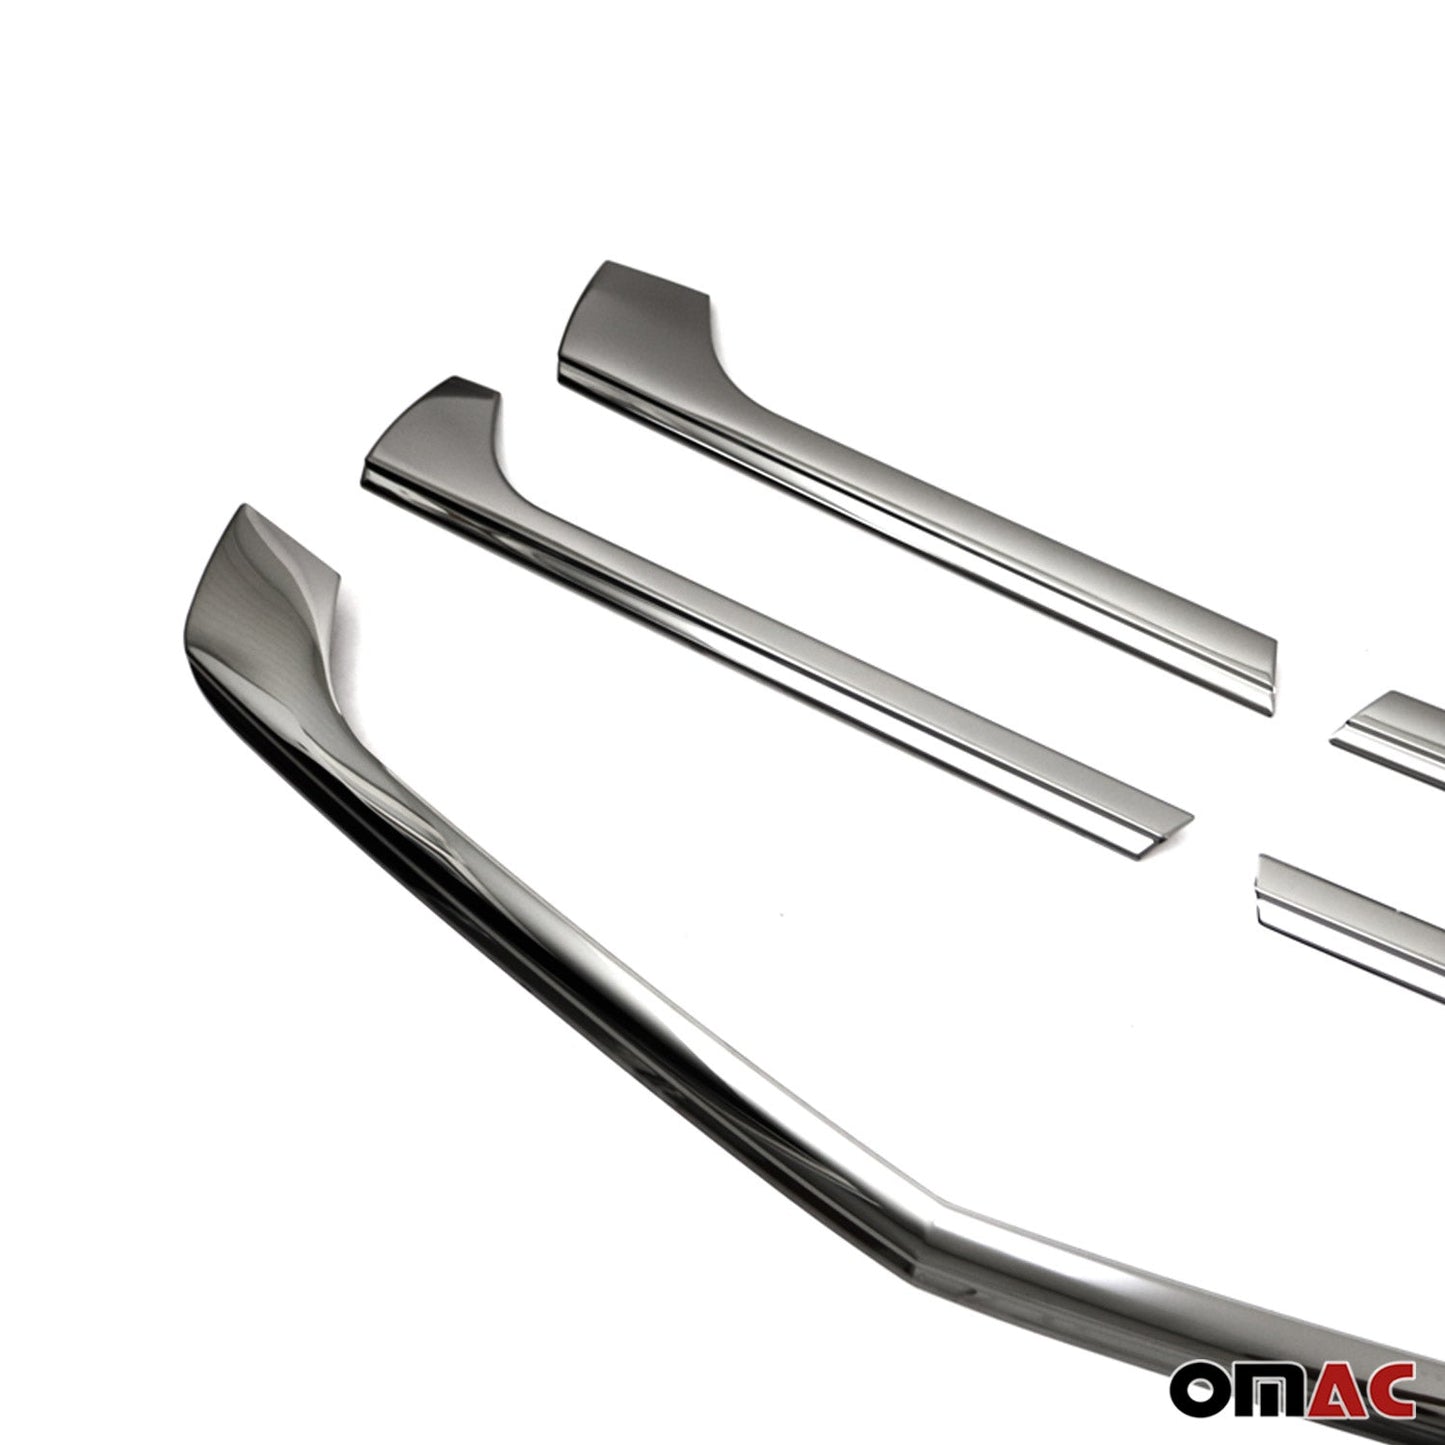 OMAC Front Bumper Grill Trim for Mercedes Sprinter W906 2014-2018 Steel Dark 5x 4724082B